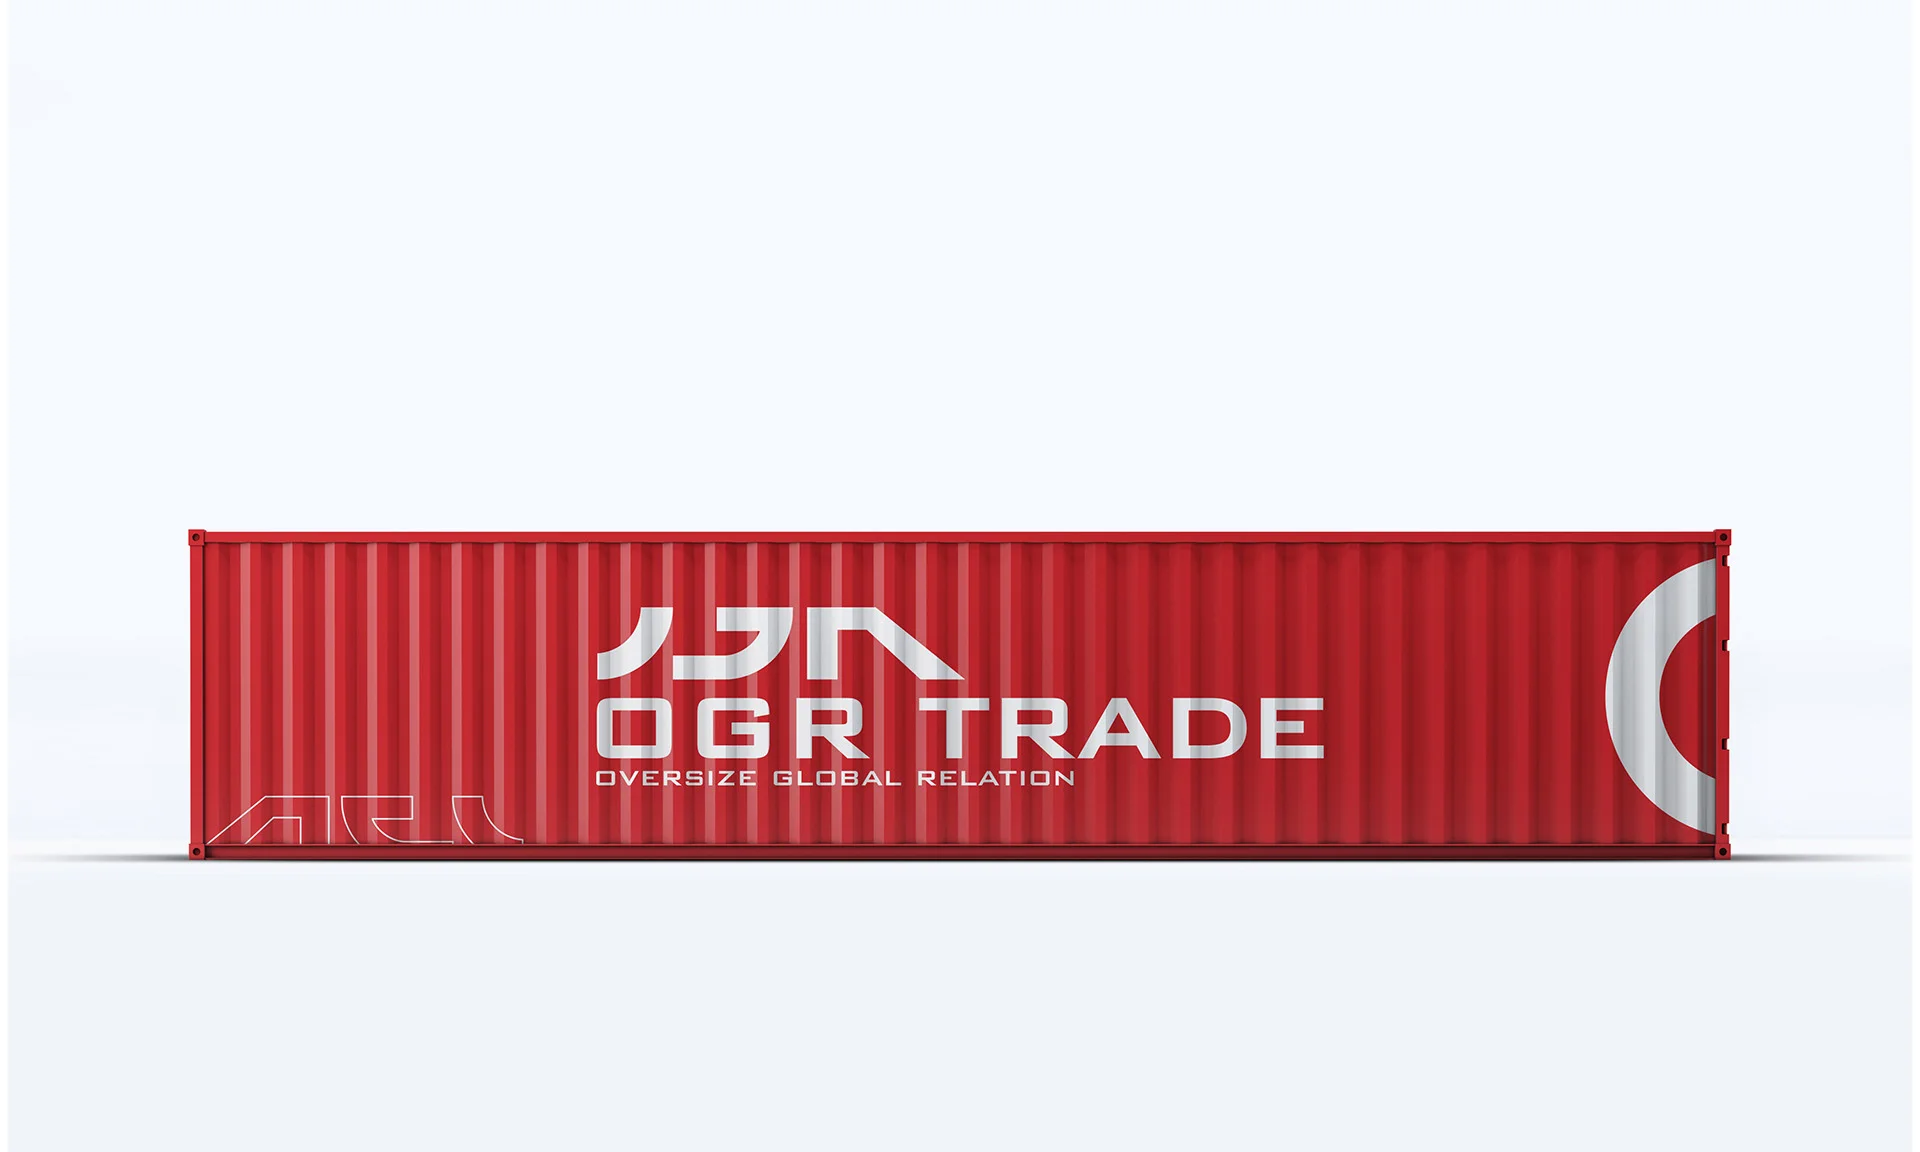 Ogr Trade Overseas Global Company Brand Identity